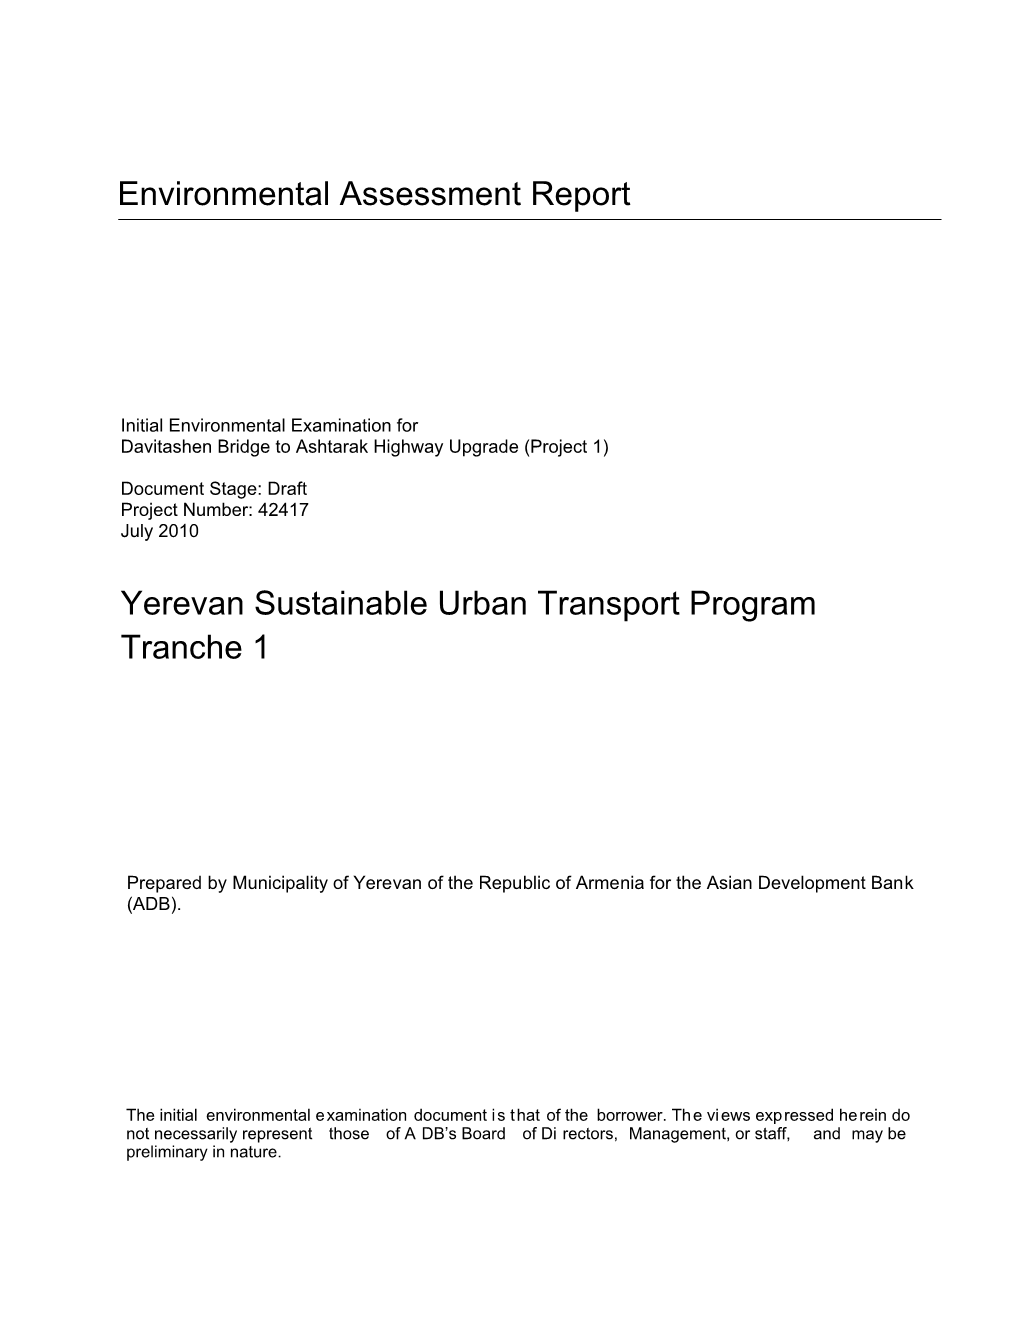 Yerevan Sustainable Urban Transport Program Tranche 1 Environmental